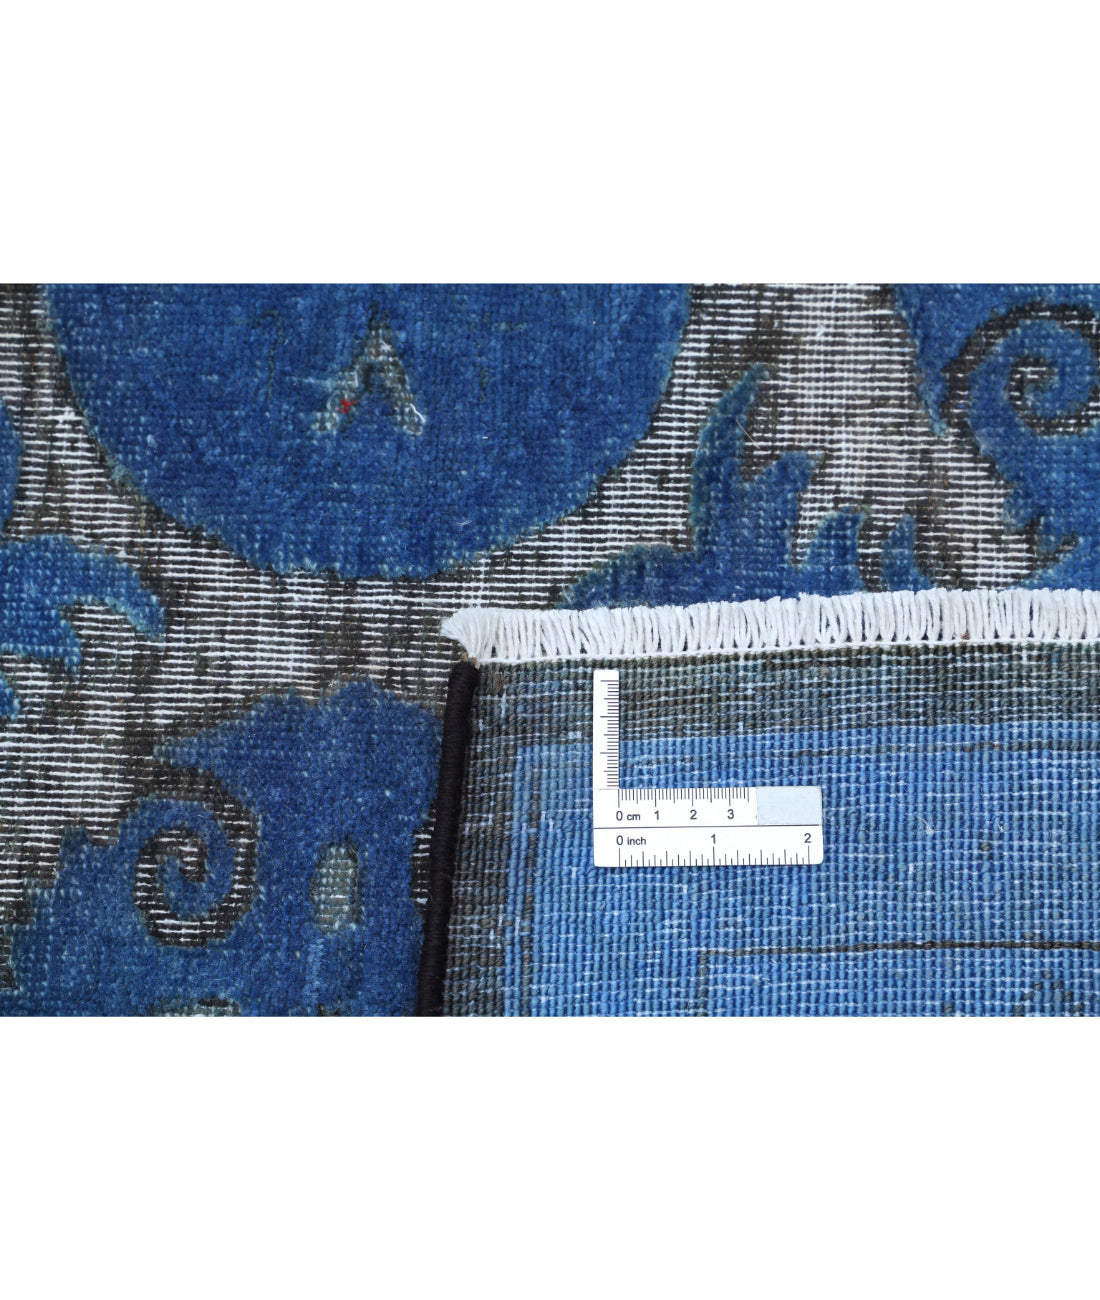 Onyx-Overdye-hand-knotted-tabriz-wool-rug-5013103-6.jpg